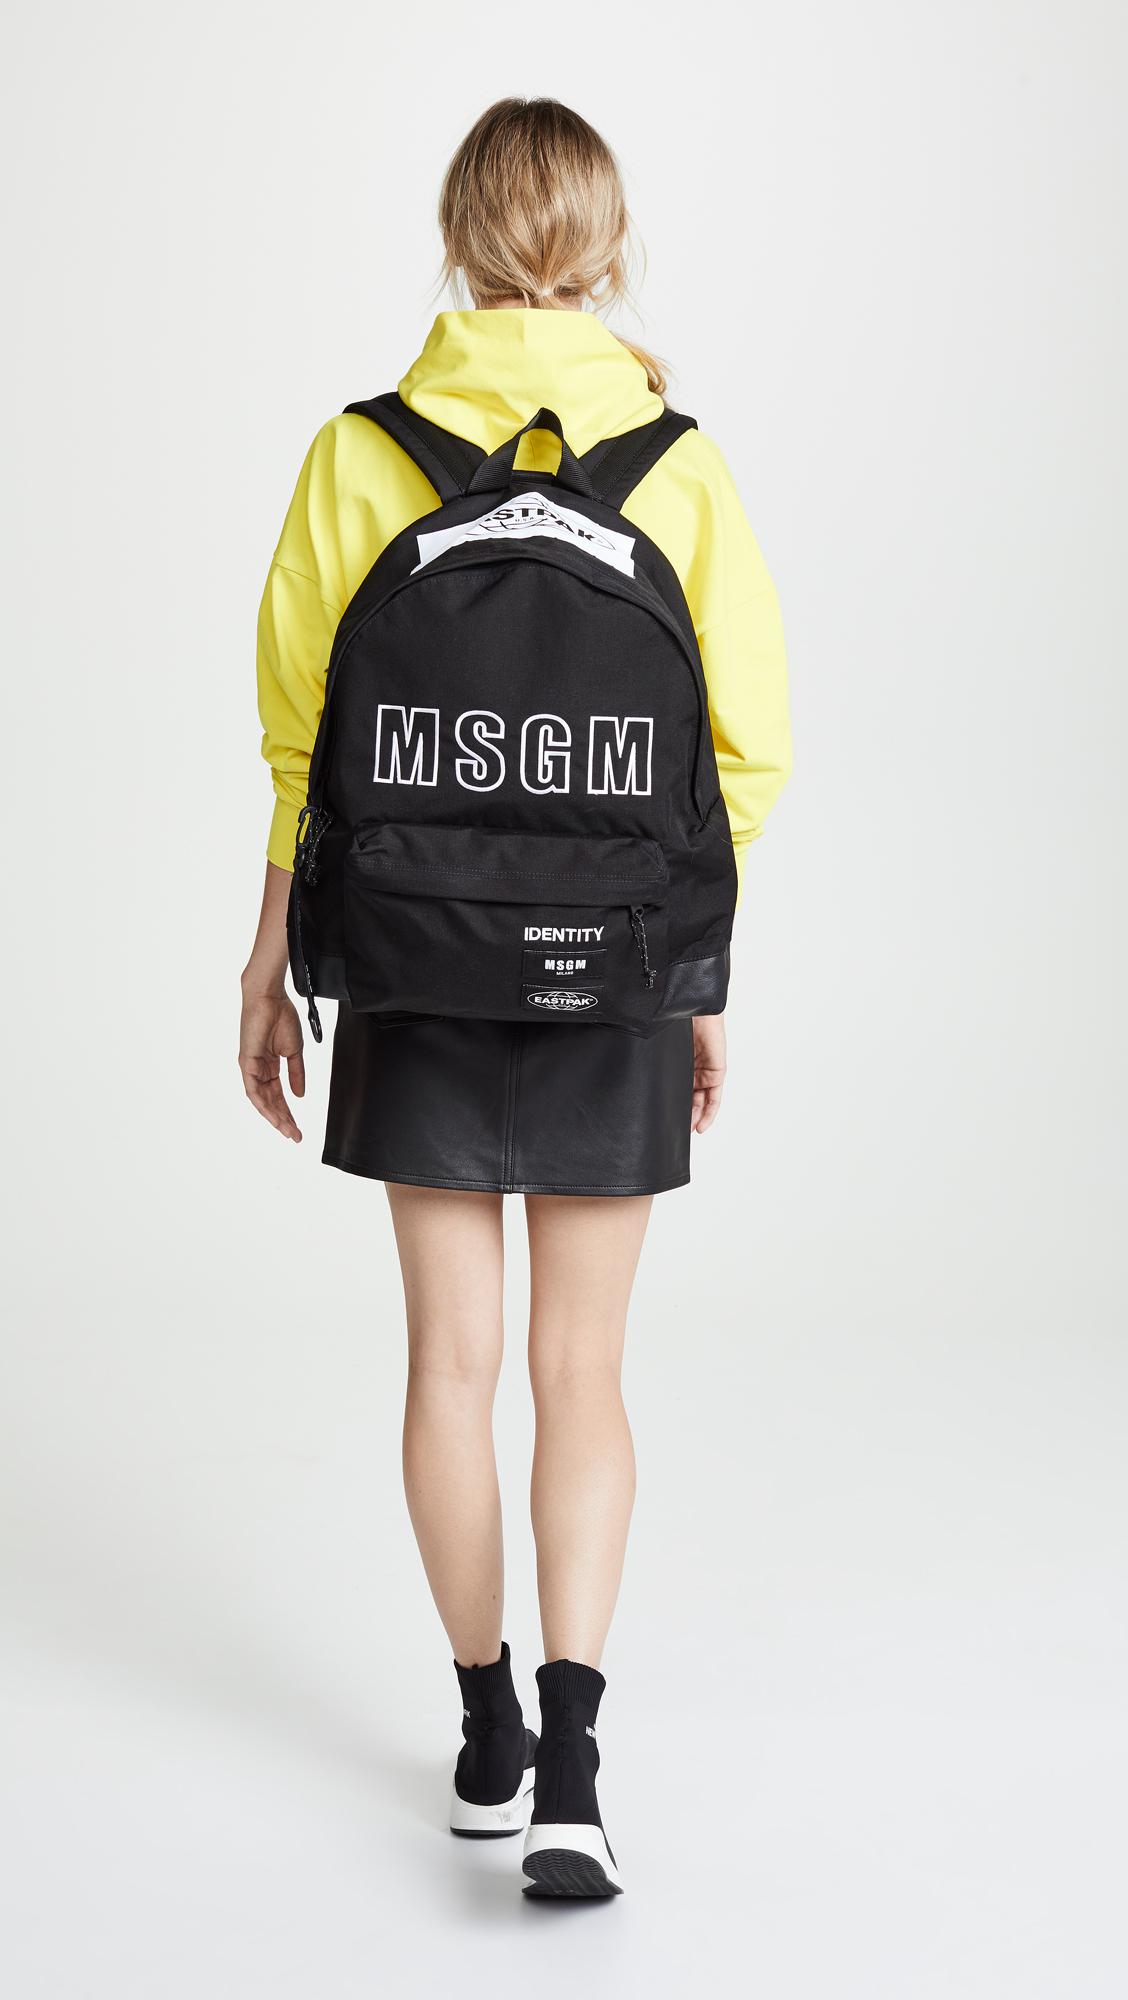 MSGM X Eastpak Backpack in Black | Lyst